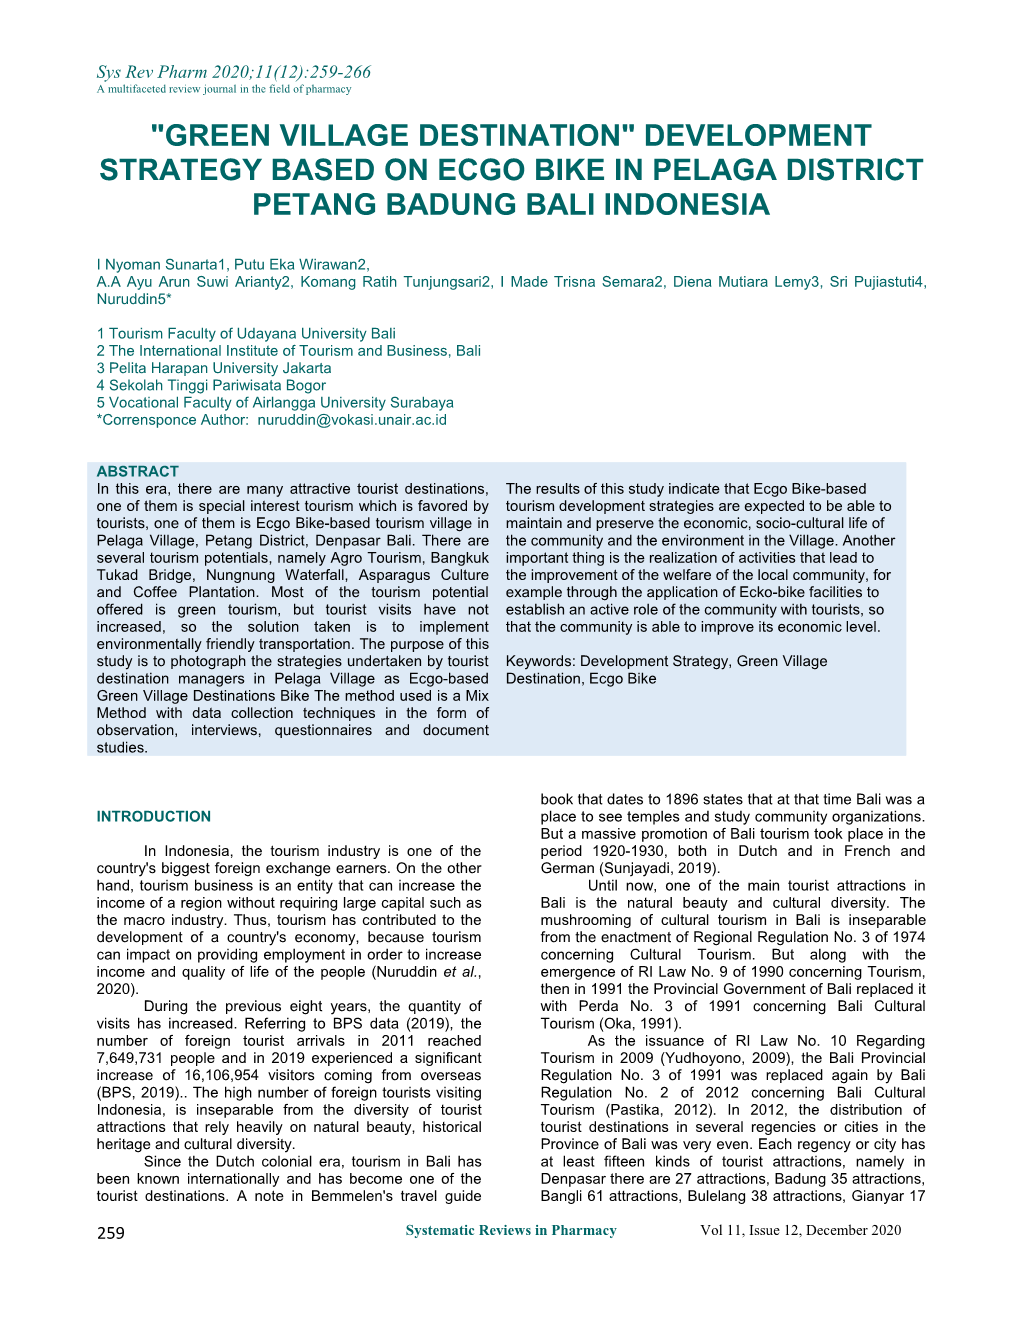 Development Strategy Based on Ecgo Bike in Pelaga District Petang Badung Bali Indonesia